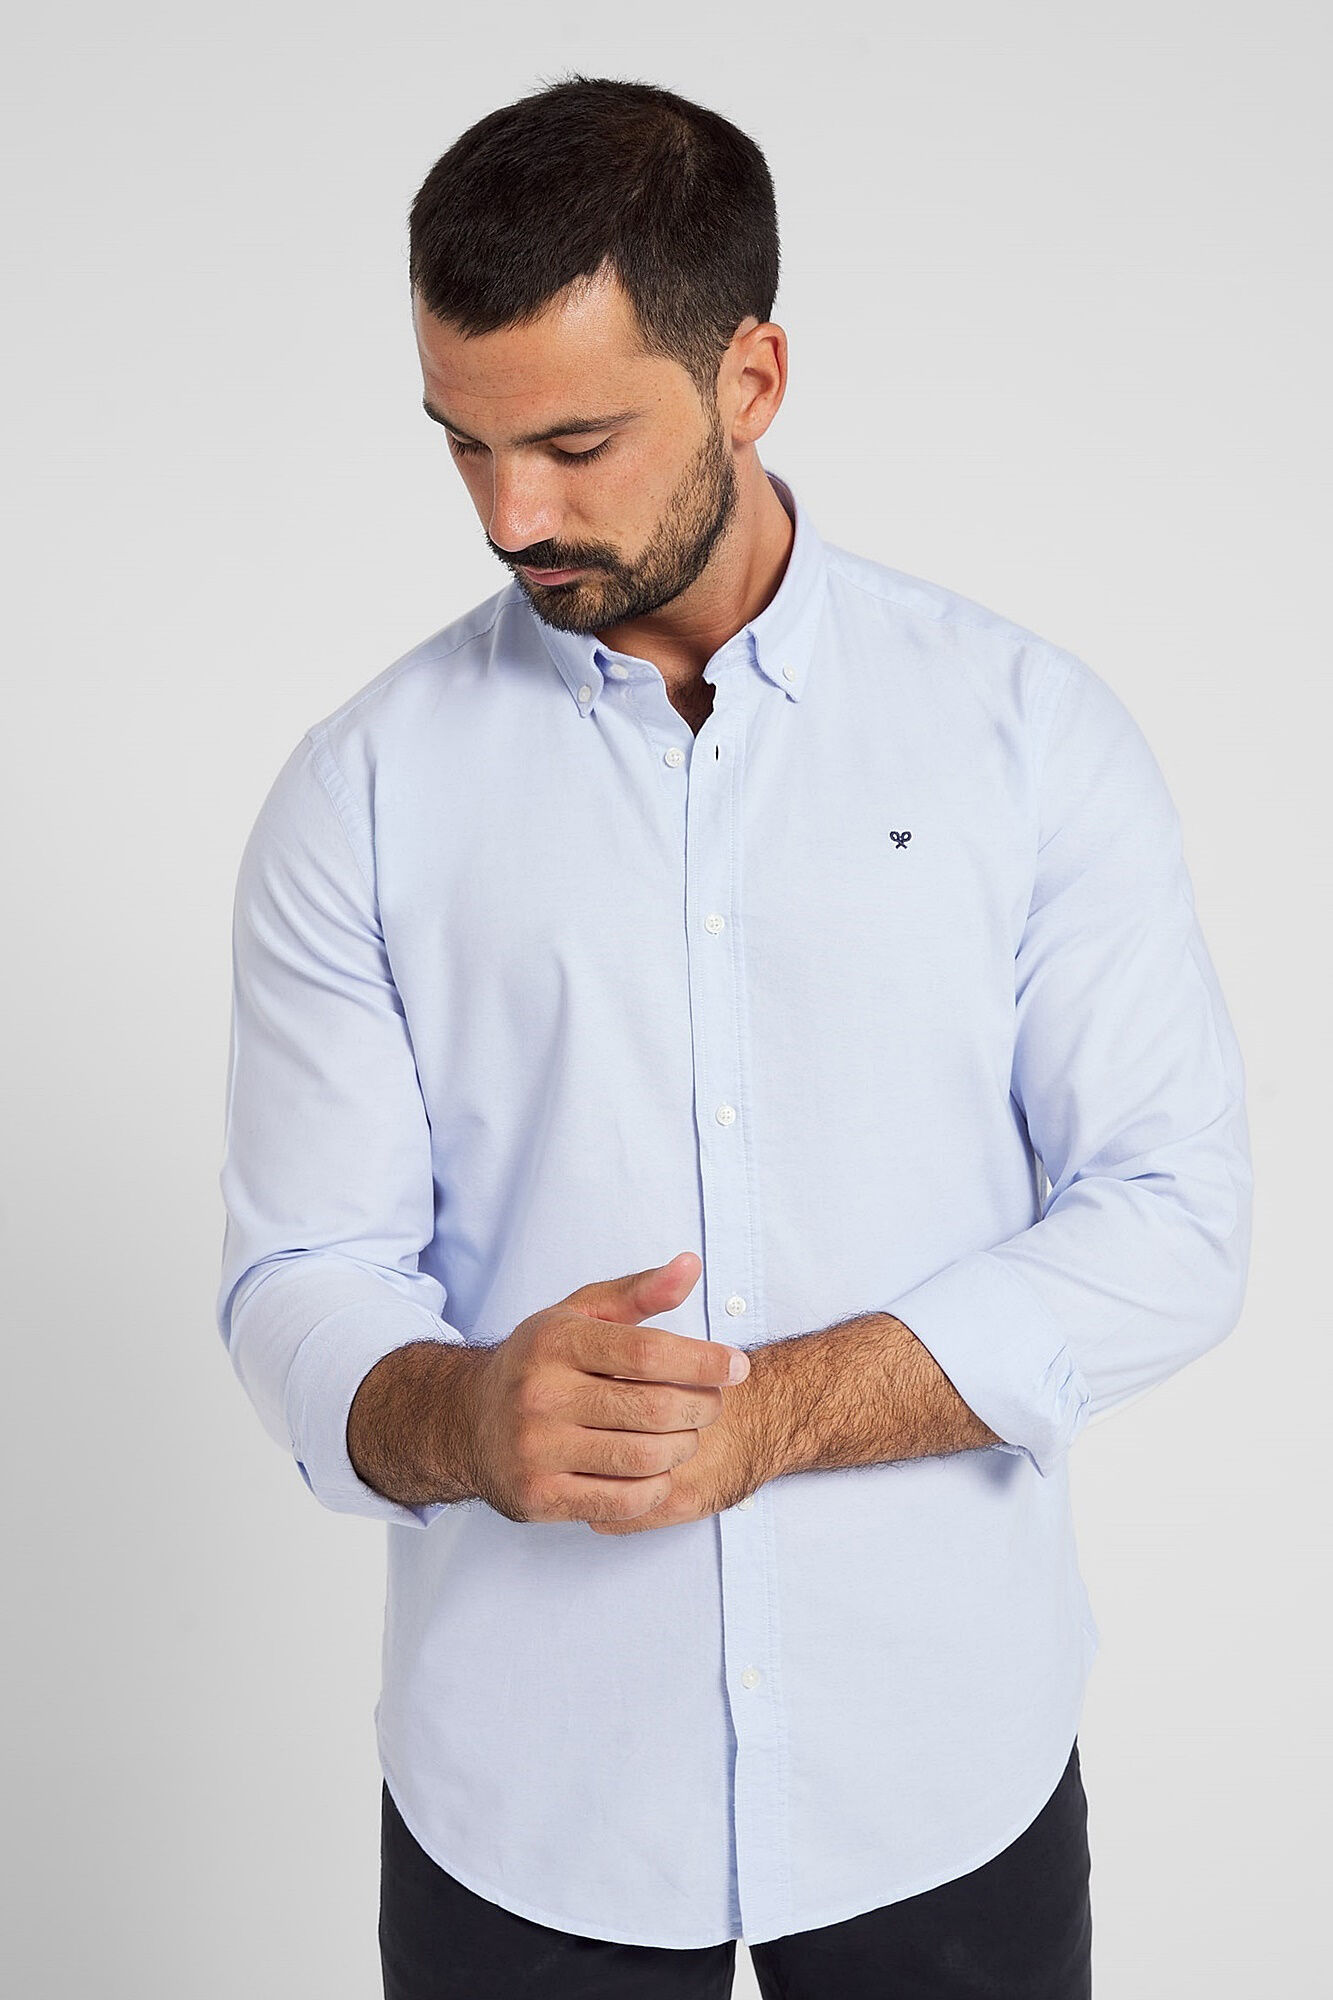 WM & MW Fashion Men’s Shirt Slim Fit Casual Long Sleeve Button Shirts Camouflage Blouse Lapel Tops 